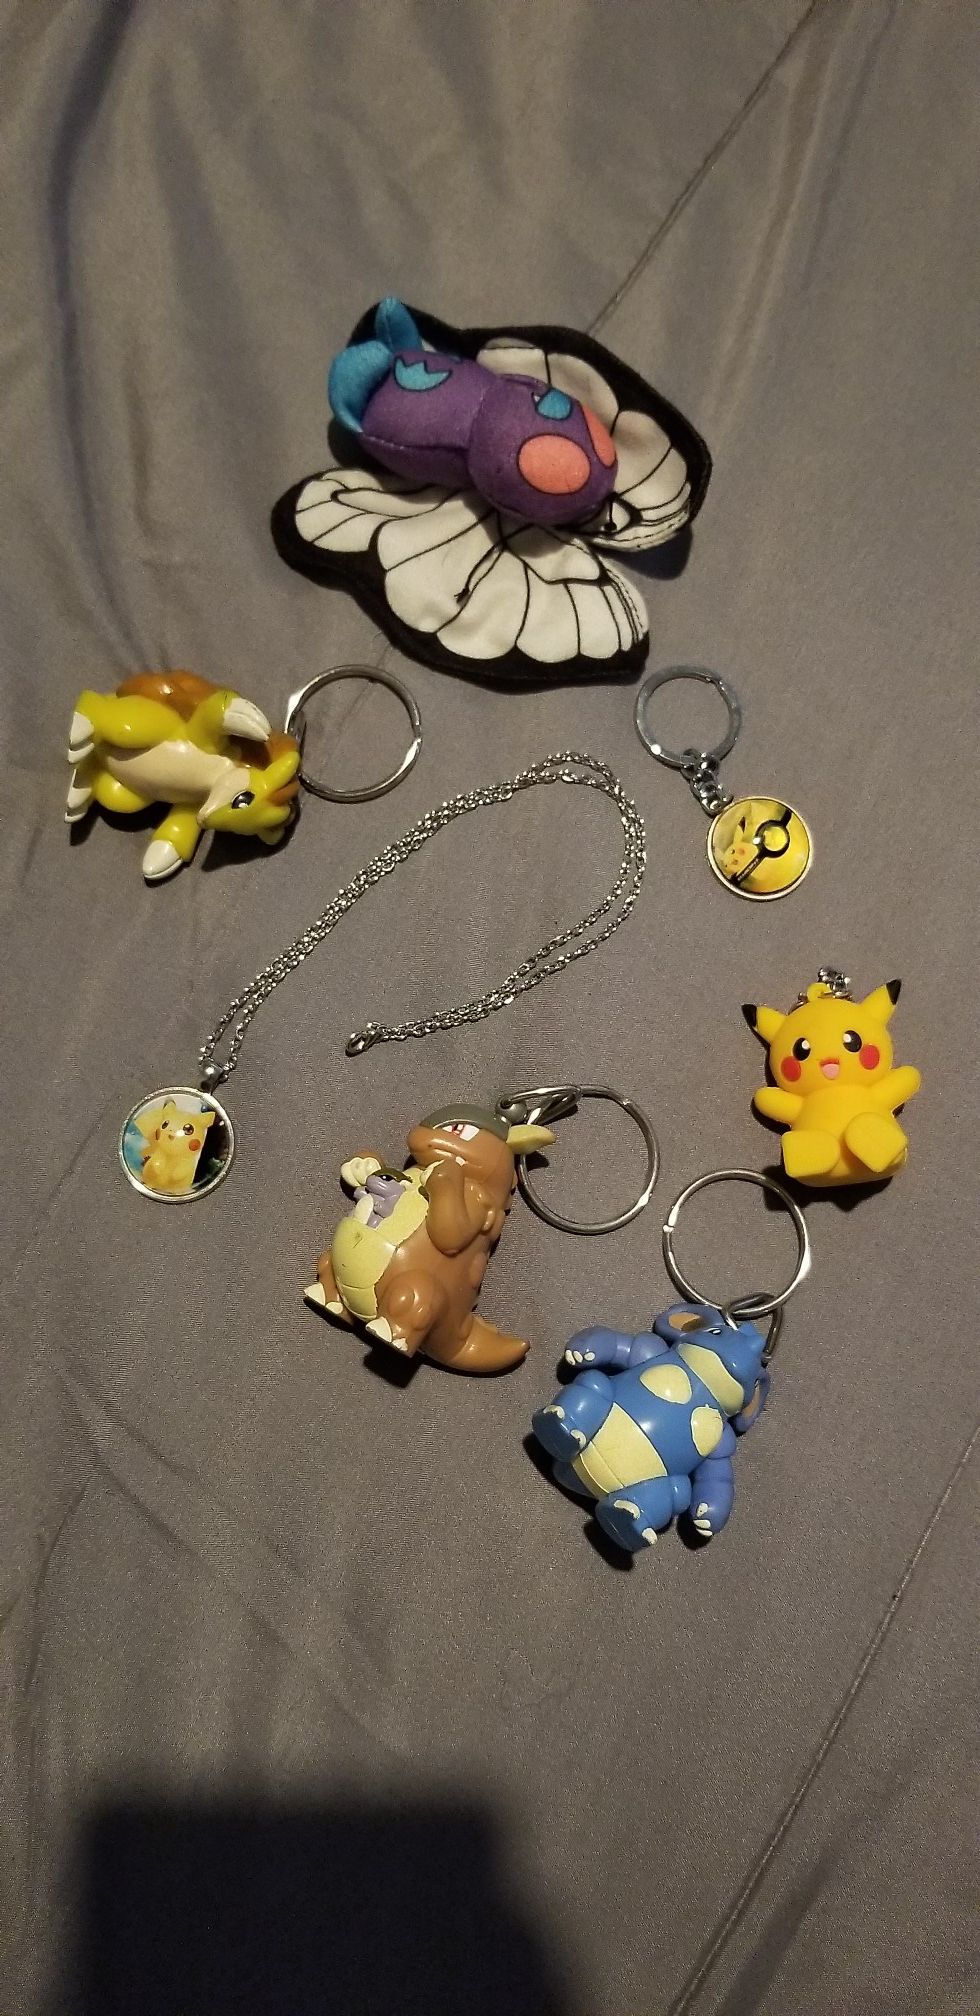 5 pokemon key chains, 1 necklace, I plushy